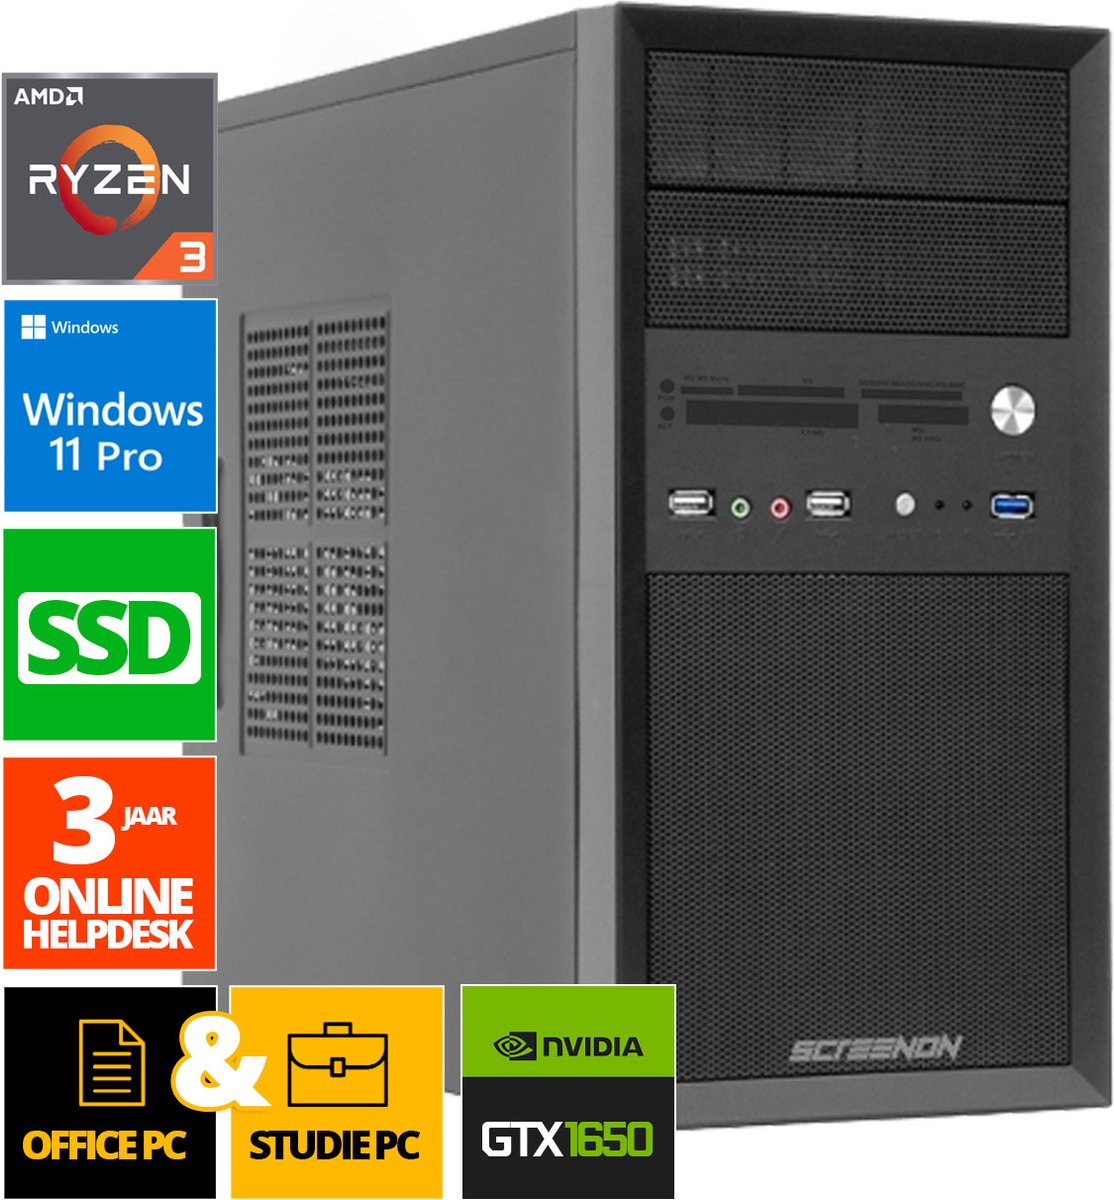 Office Computer - Ryzen 3 - 1024GB SSD - 32GB RAM - GTX 1650 - WX32347 - Windows 11 - ScreenON - Allround Business PC + 5 in 1 Multifuntionele Cardreader + WiFi & Bluetooth